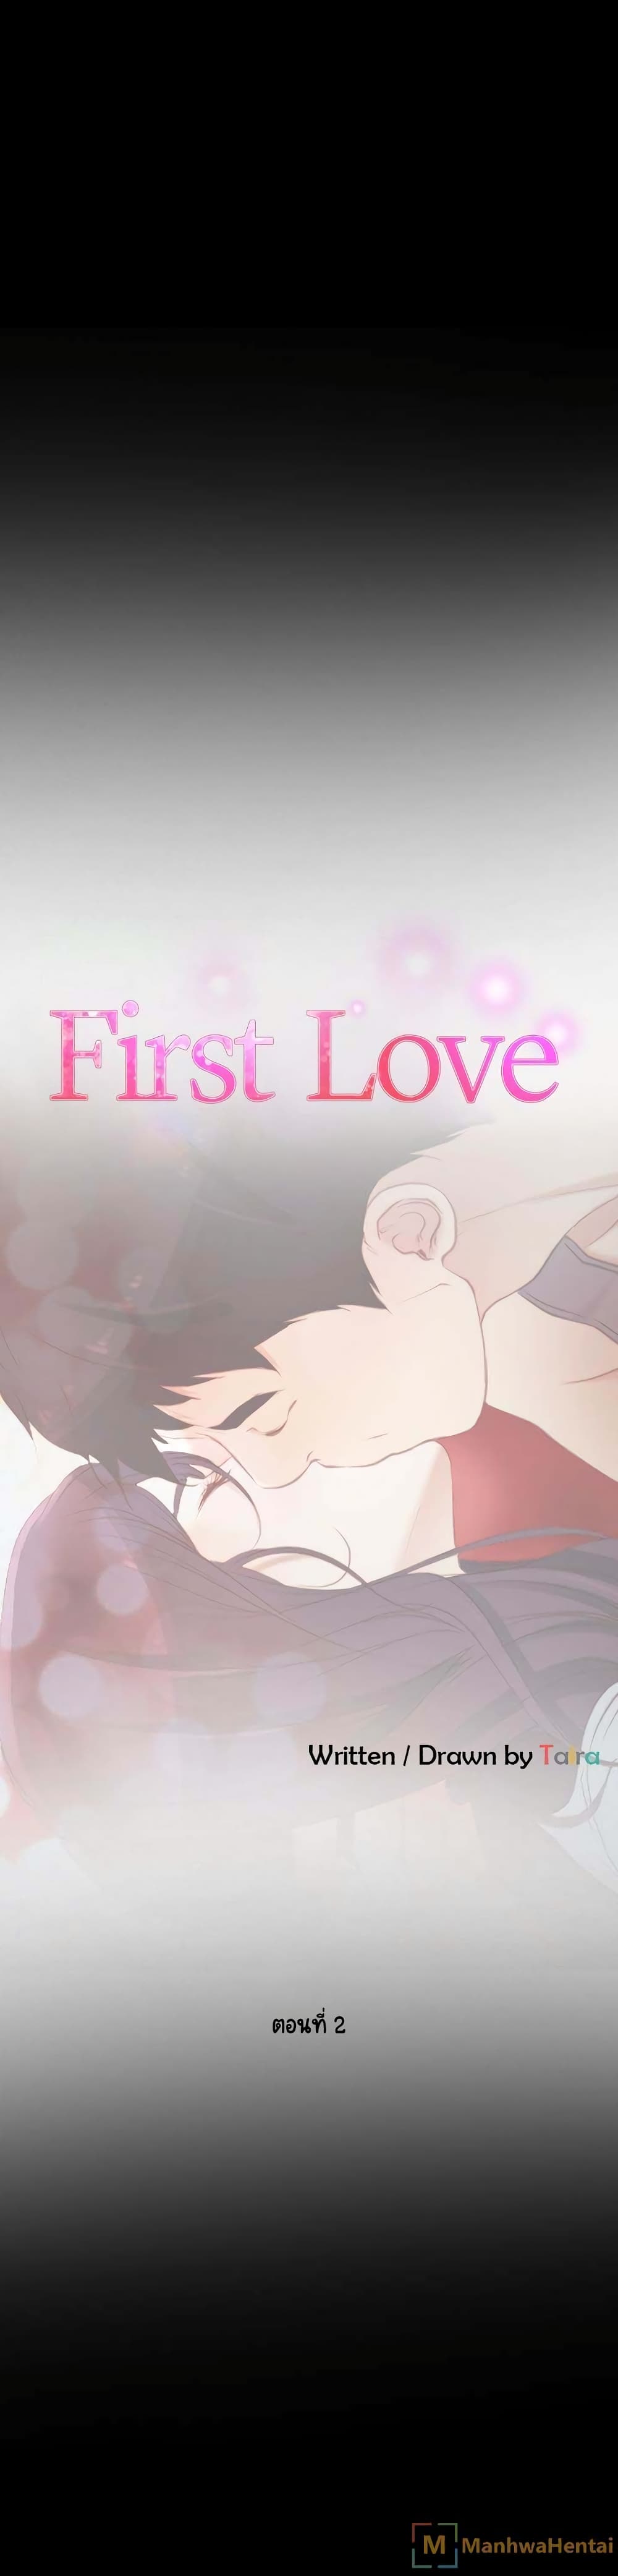 First Love 2 (3)